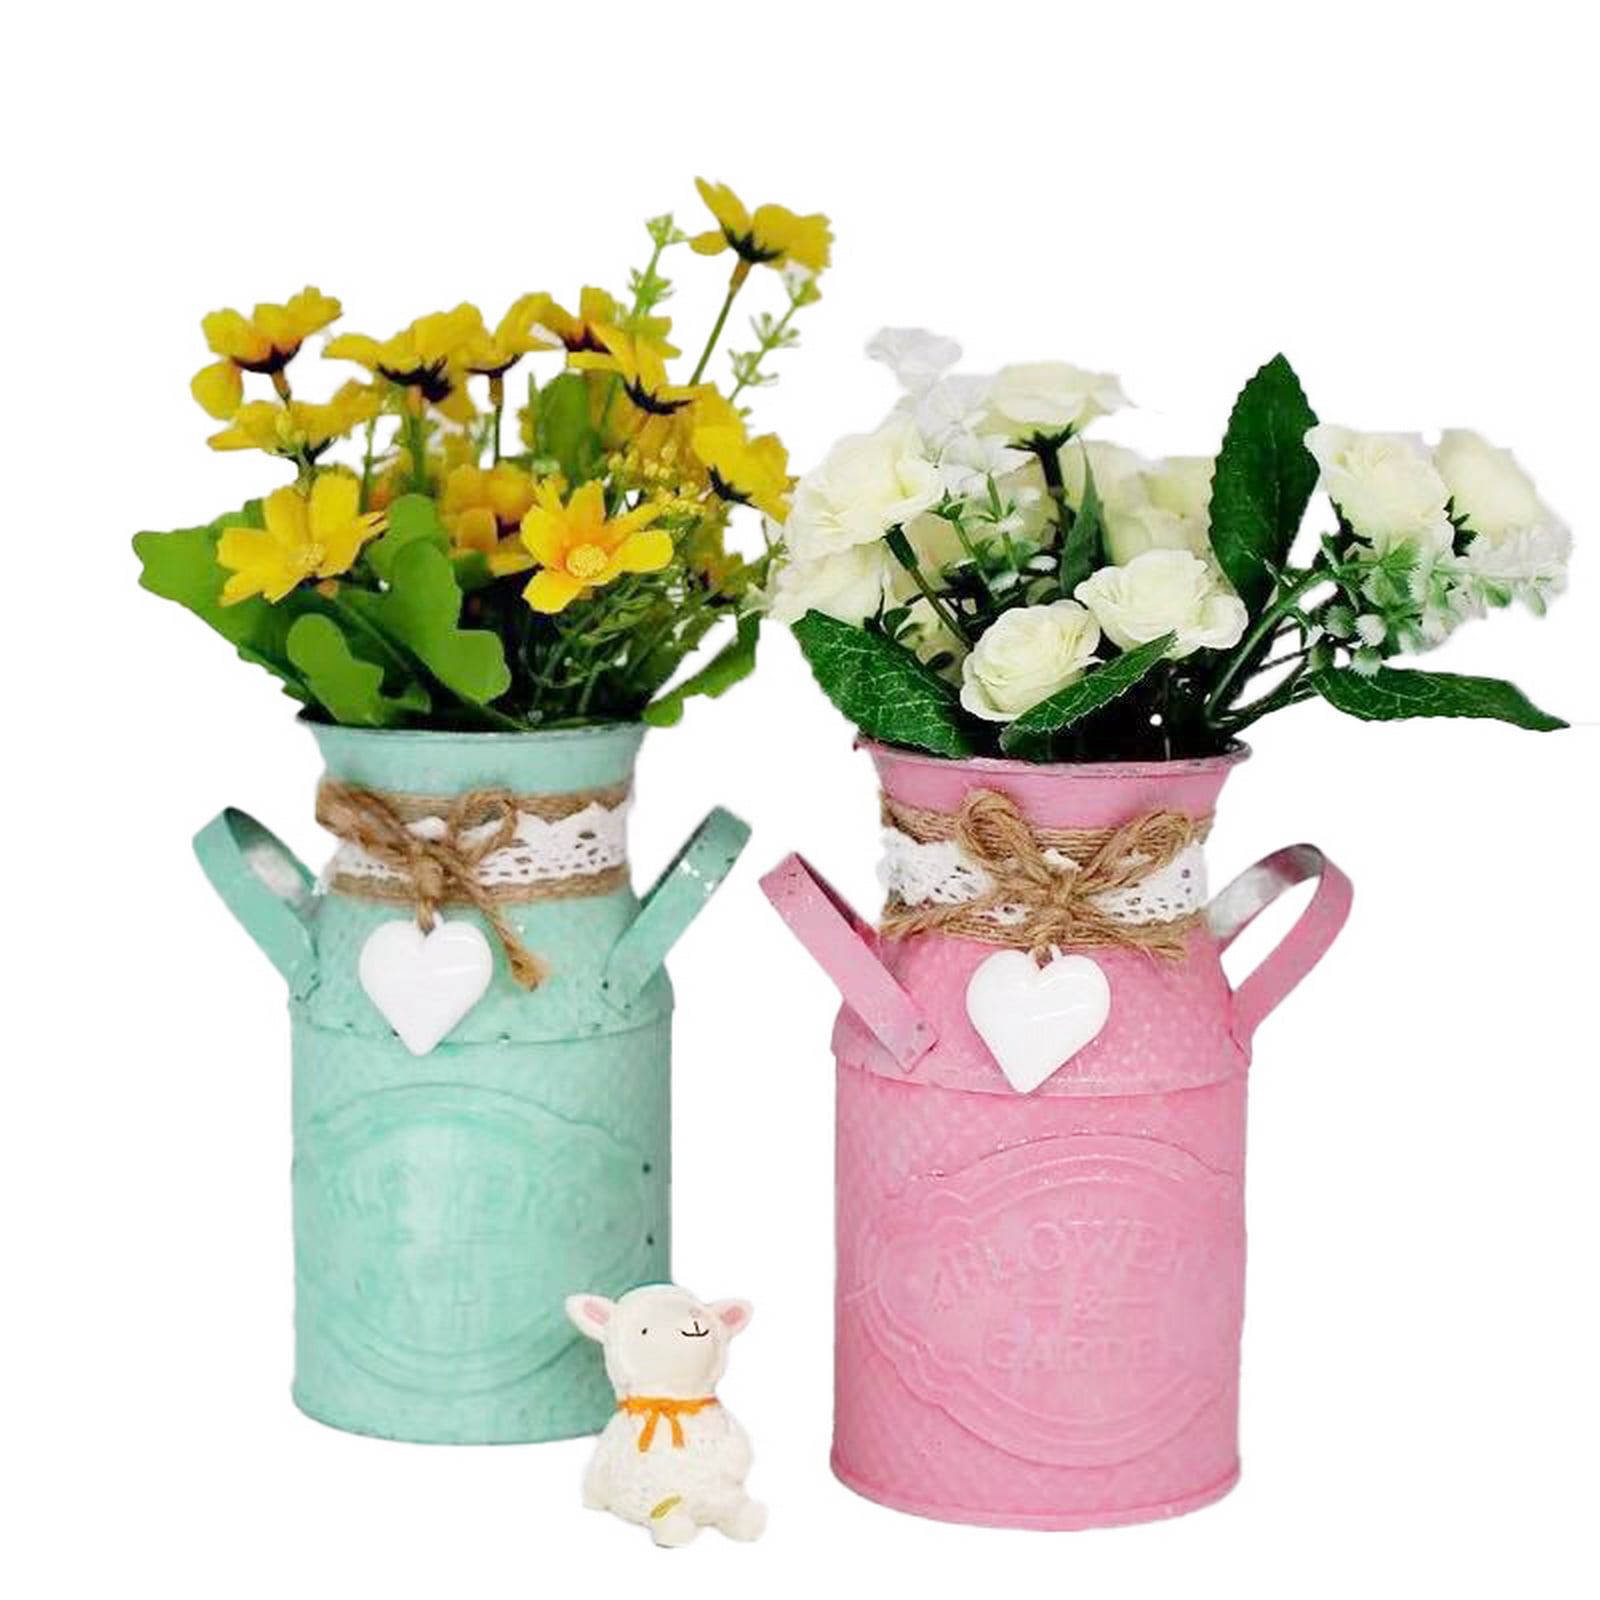 French Vintage Bucket Floor Vase for Floral Weddings Events Home Decor Soyizom Galvanized Metal Vase Flower Bucket，Set of 2 Farmhouse Decorative Vase Flower Container for Rustic Decor Planter Vase 